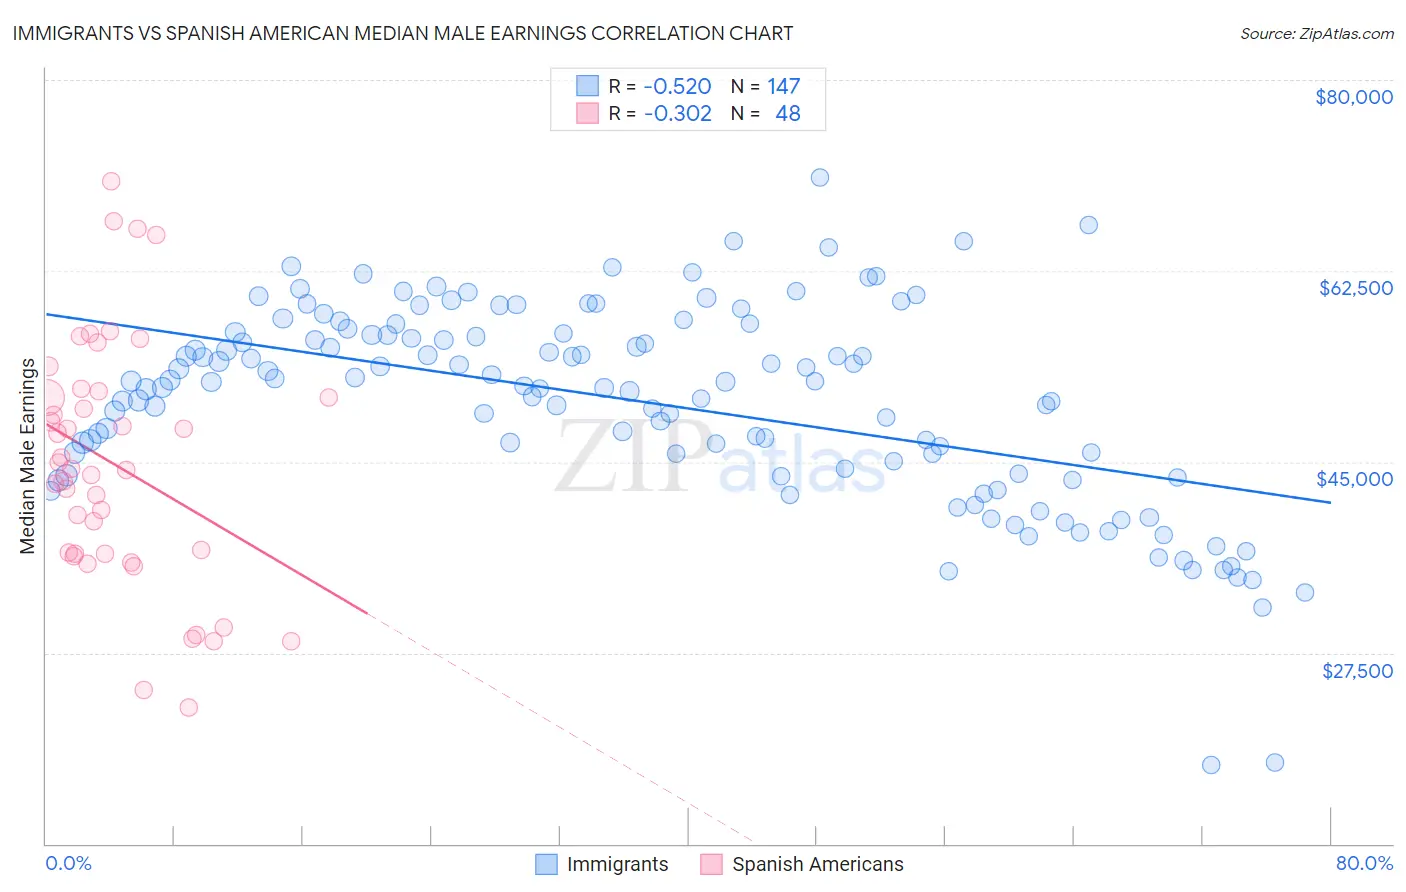 Immigrants vs Spanish American Median Male Earnings